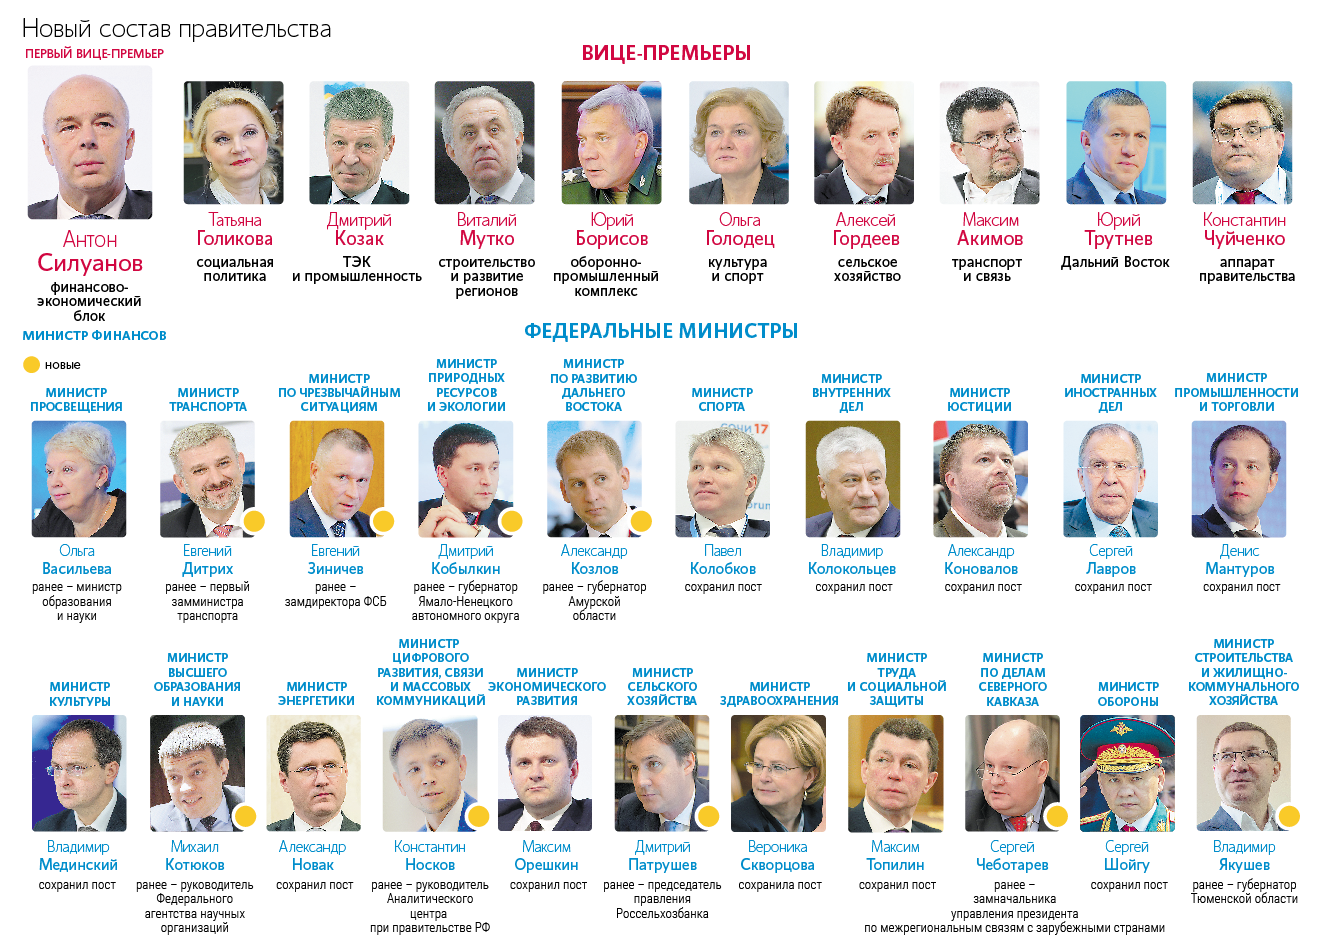 Сайт министерства правительства. Правительство РФ список министров. Министры России список. Правительство России фамилии. Фамилии членов правительства.